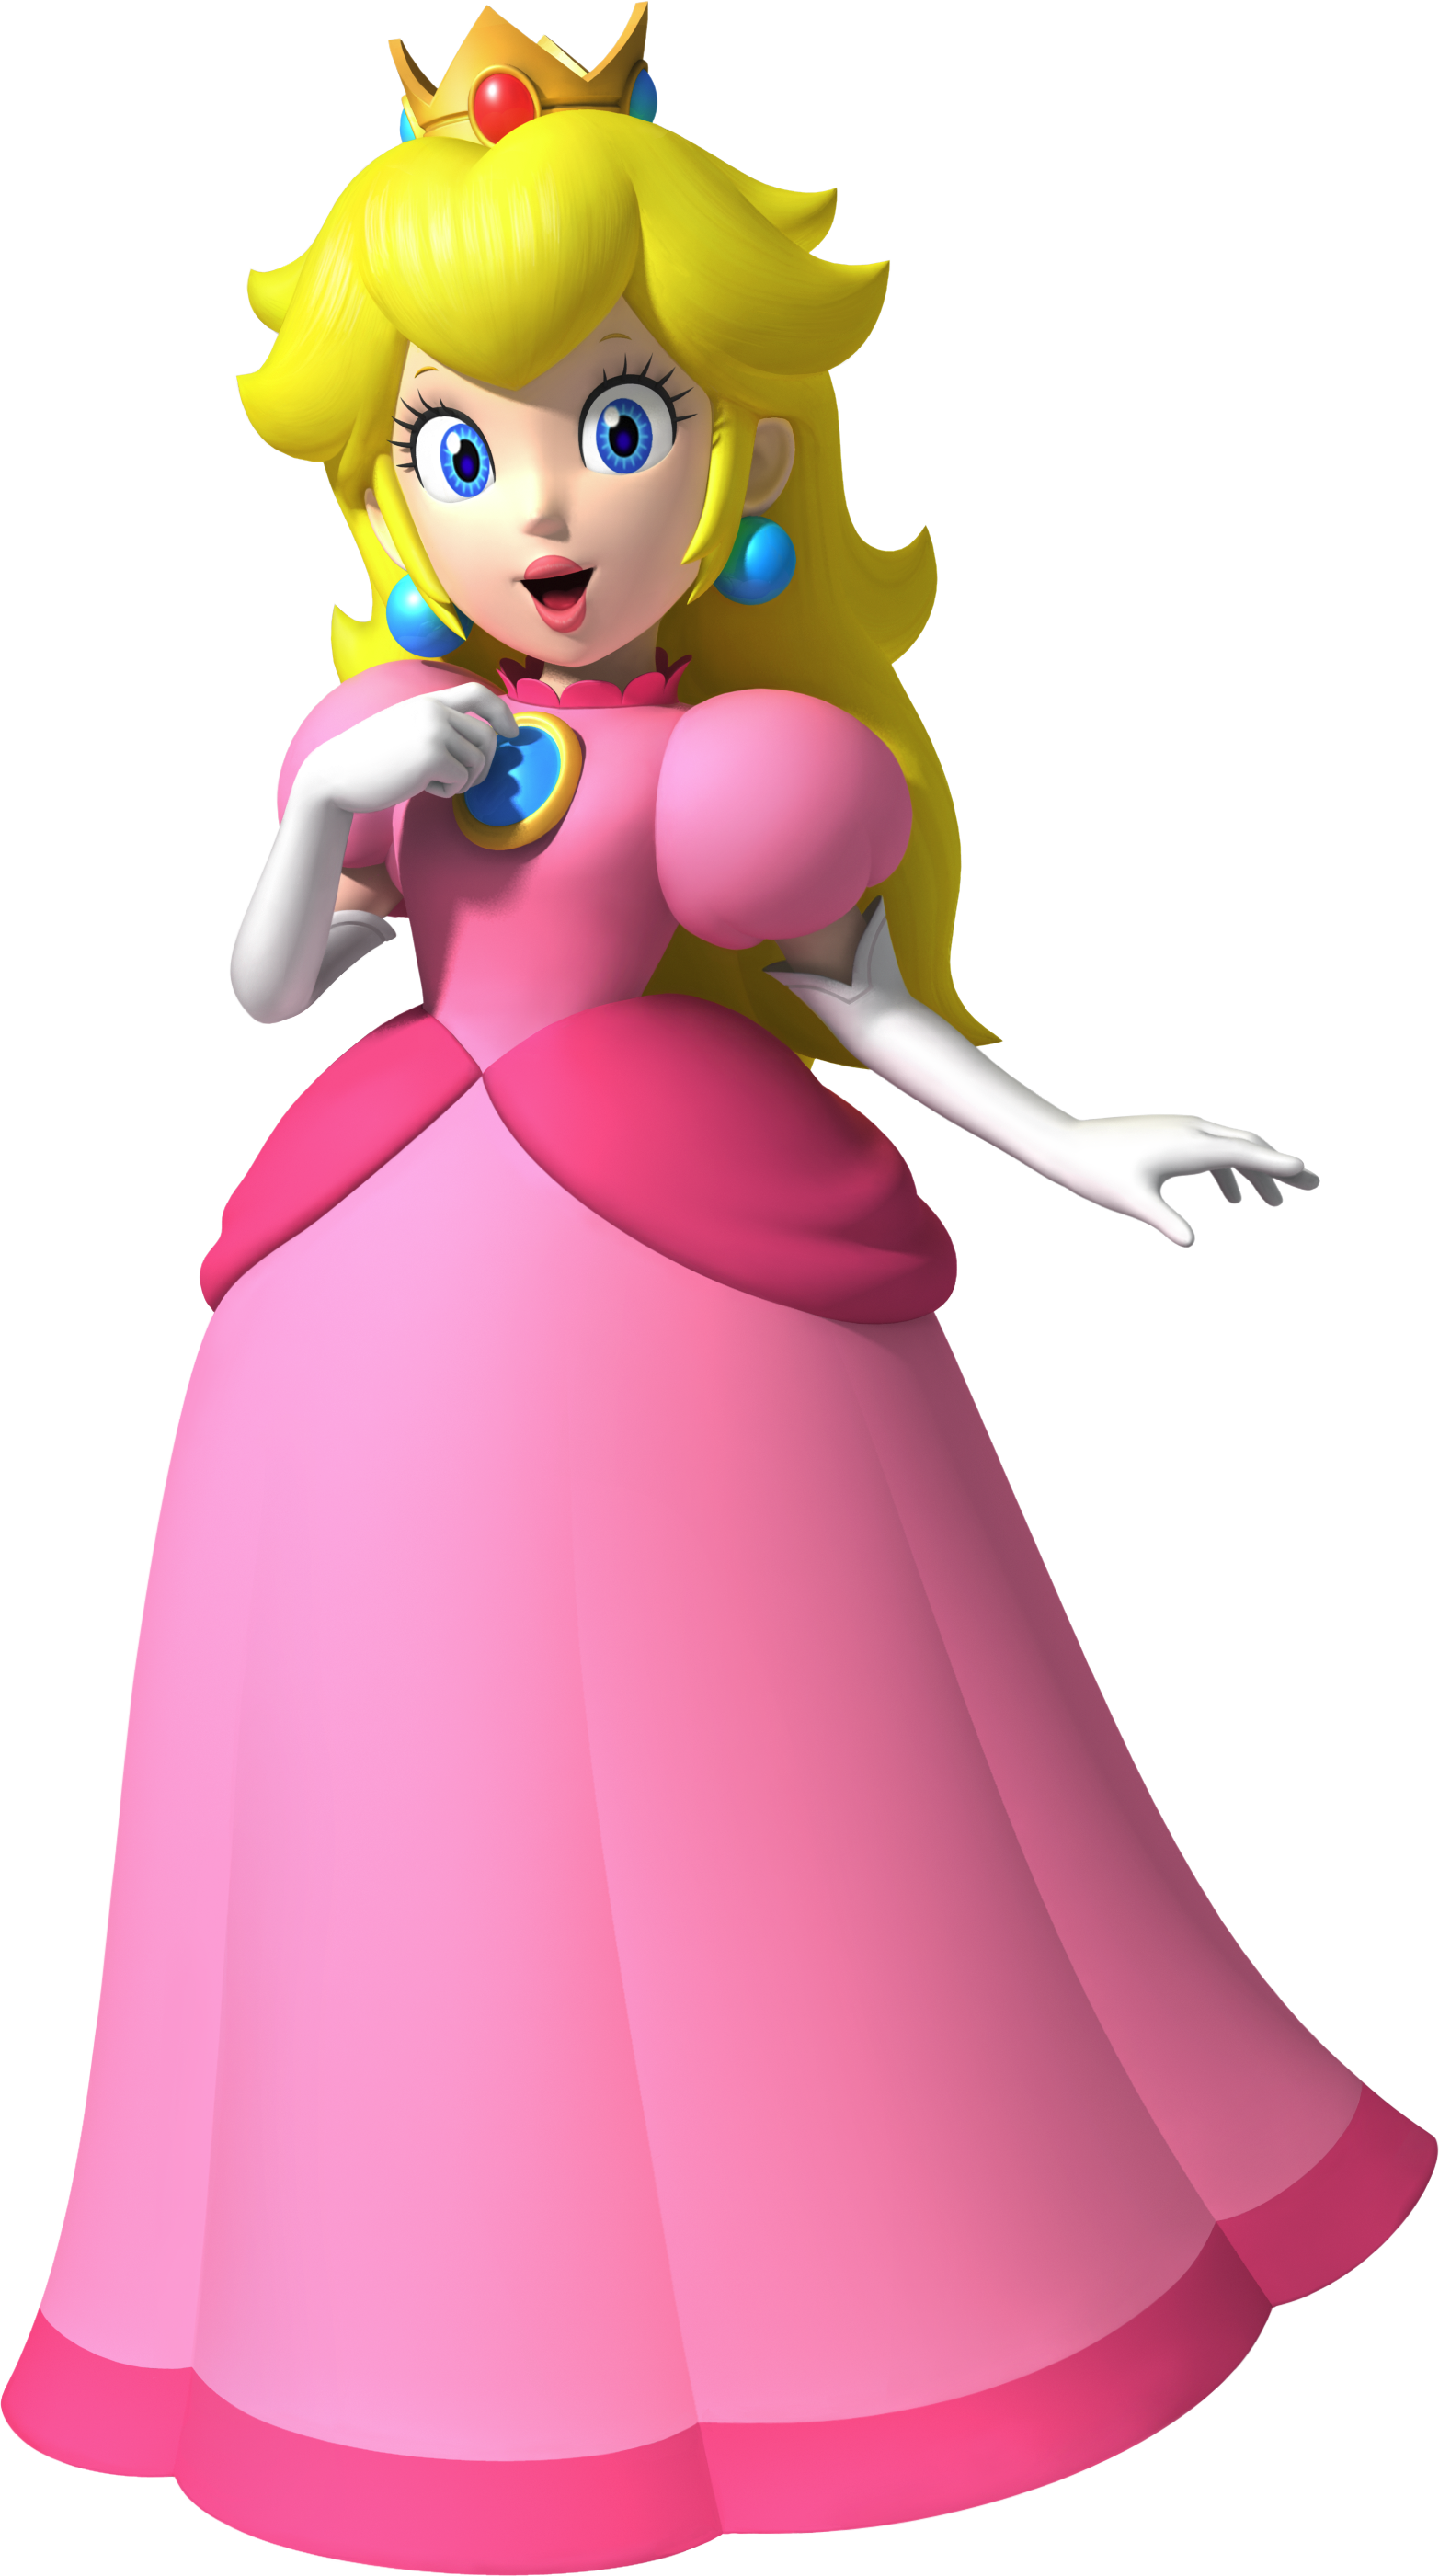 2pcs/lot Mario Princess Toadstool Peach Figures Toys PVC 